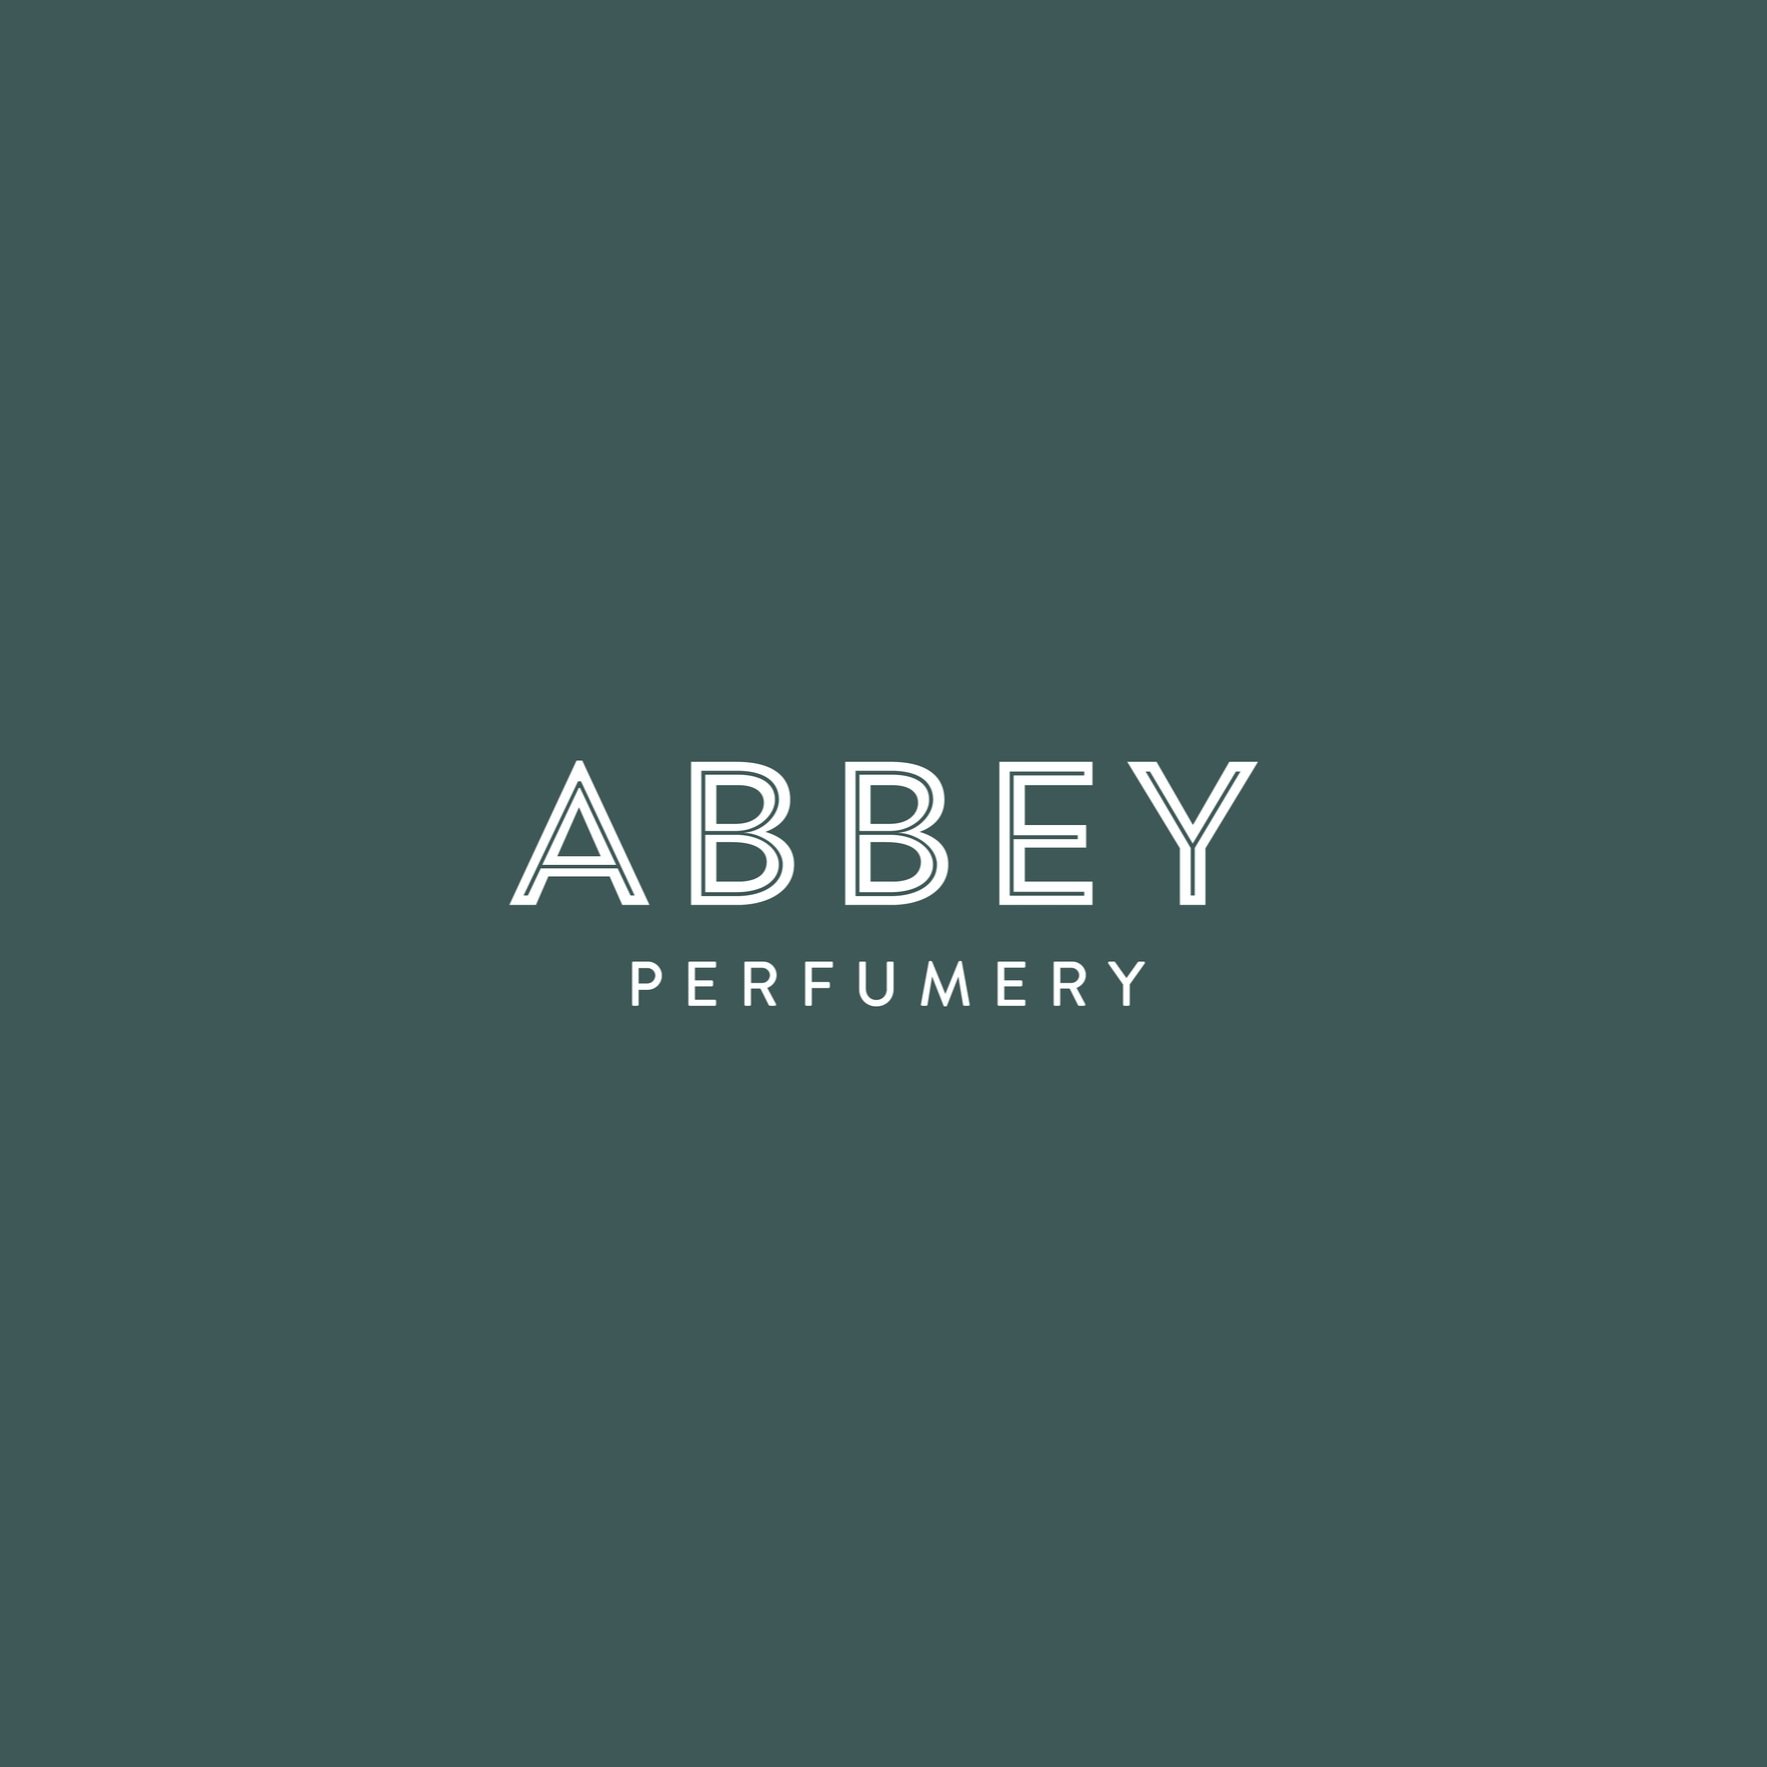 Freelance-graphic-designer-Abbey Perfume Logo, Branding And Label Design - Green Background With Minimal Logo Design 